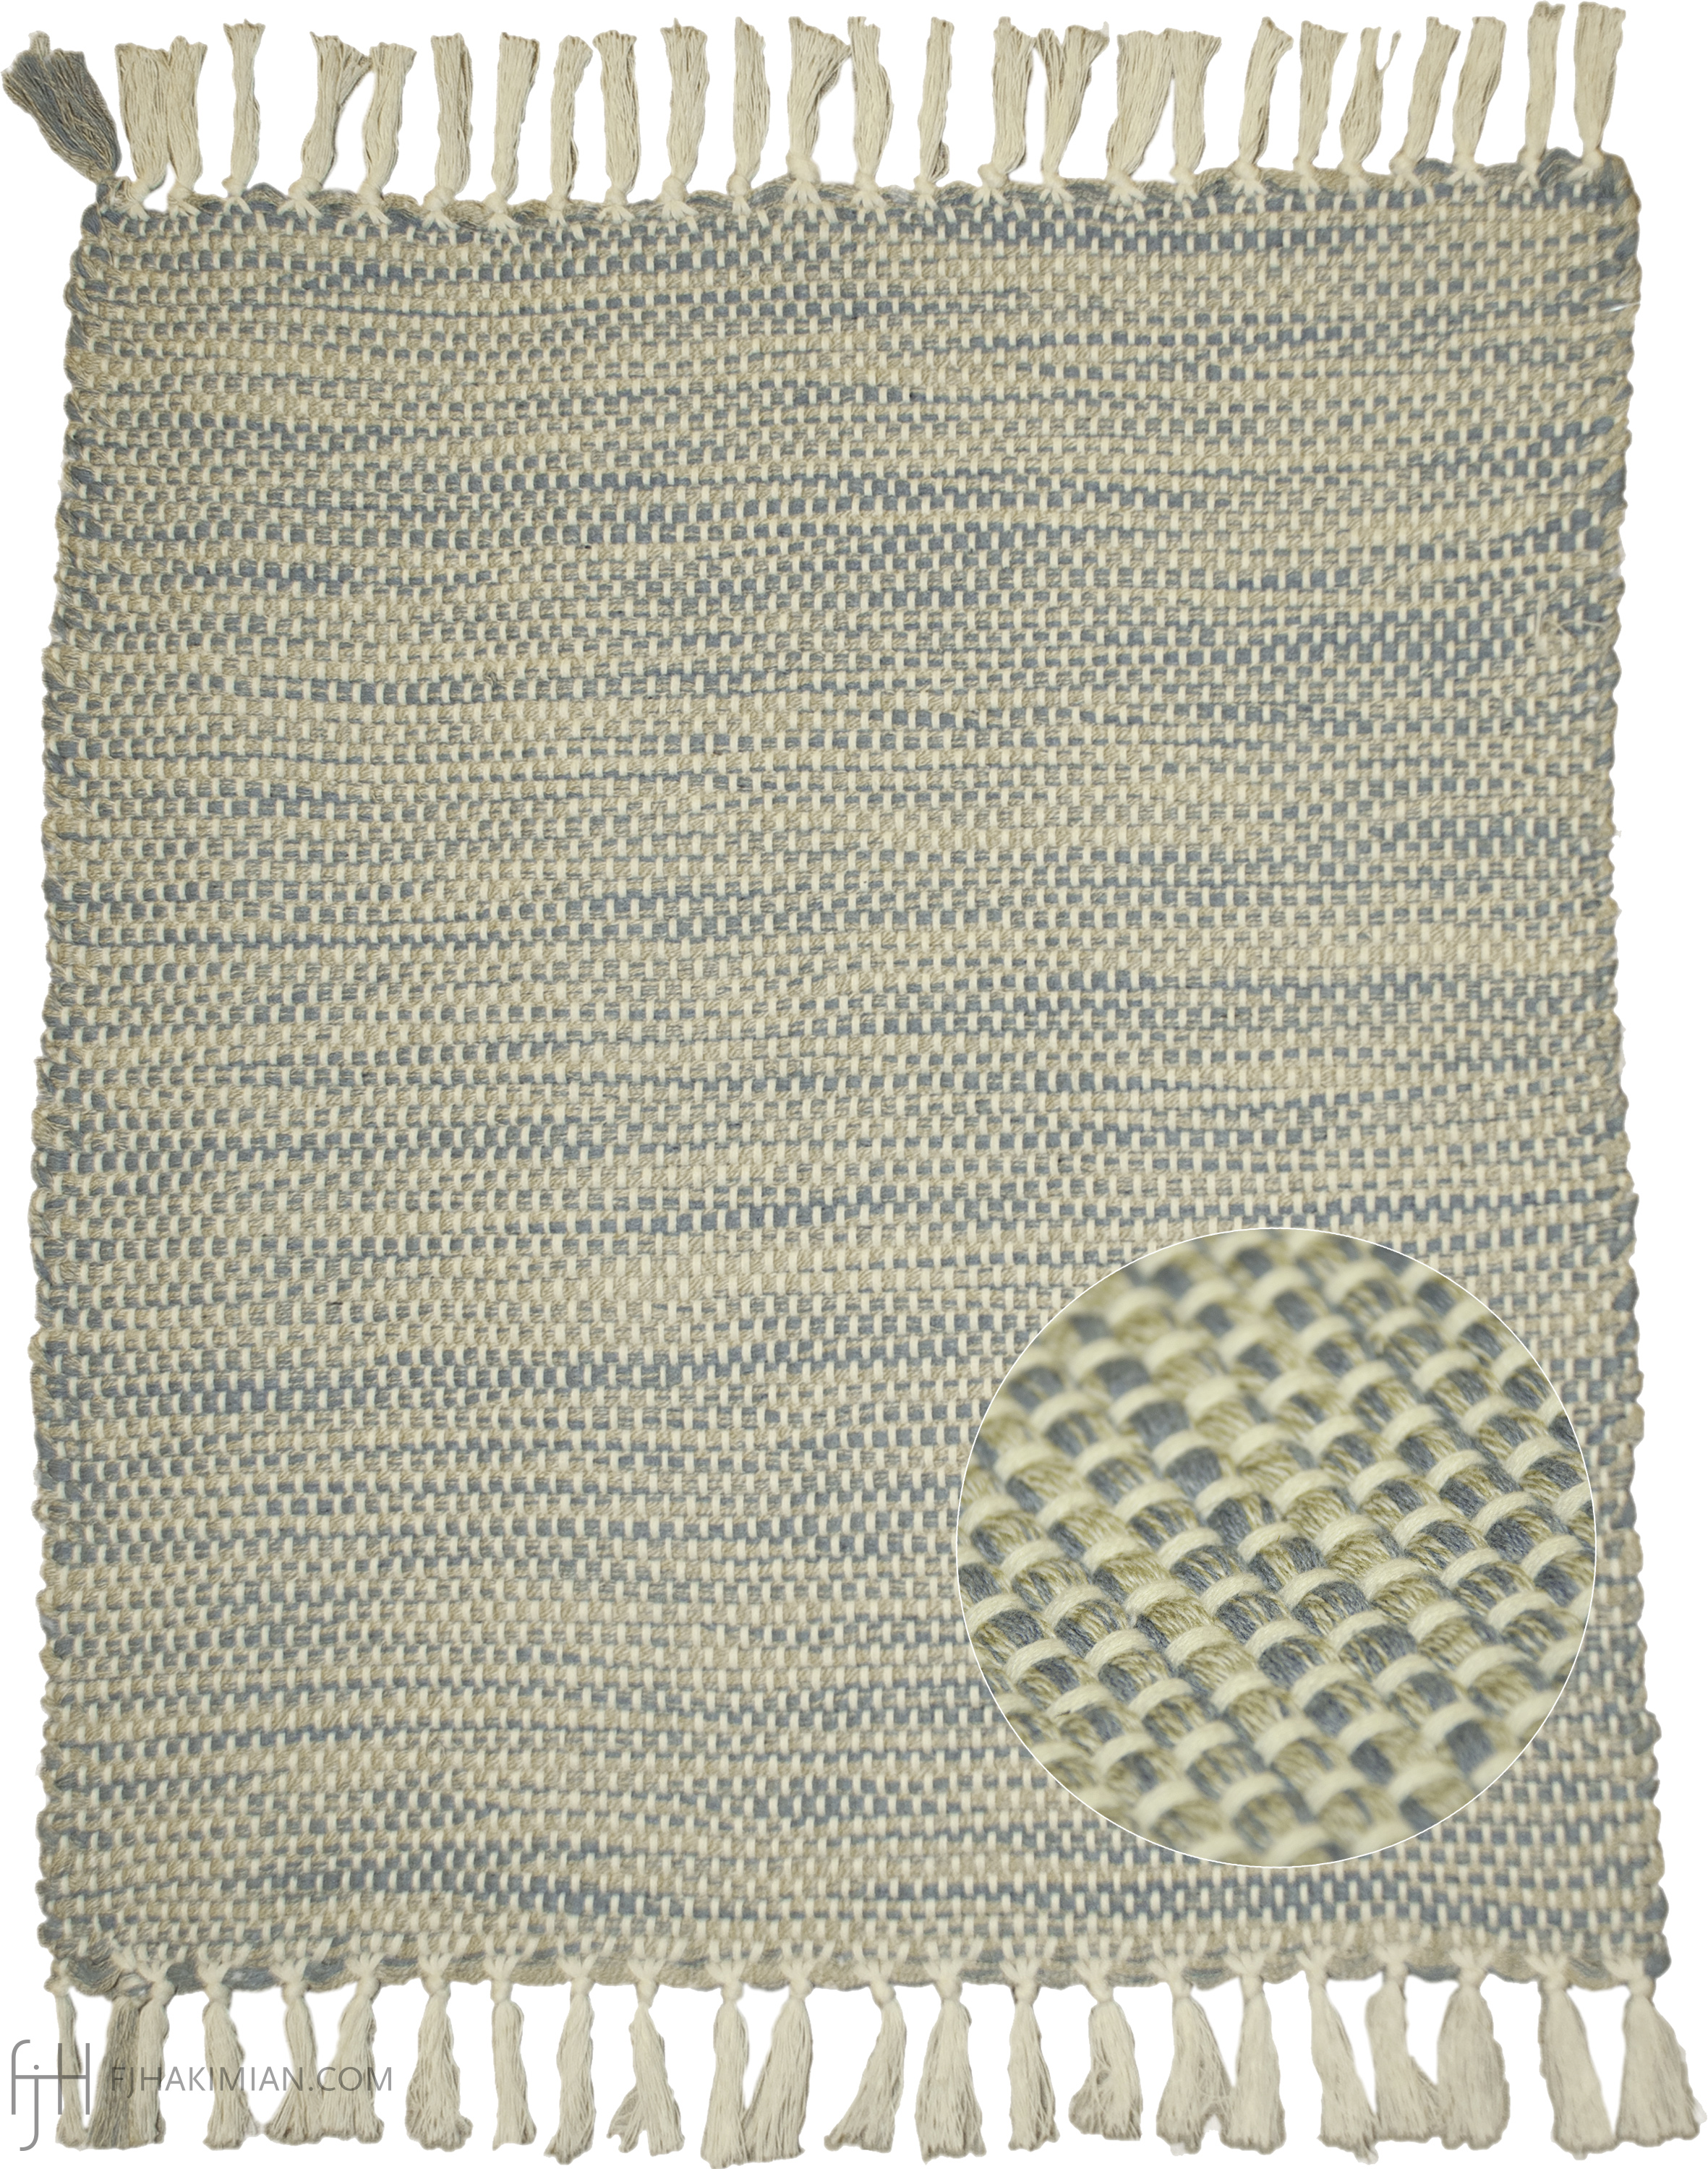 WY-HMP02 | Custom South American Carpet | FJ Hakimian | Carpet Gallery in NYC